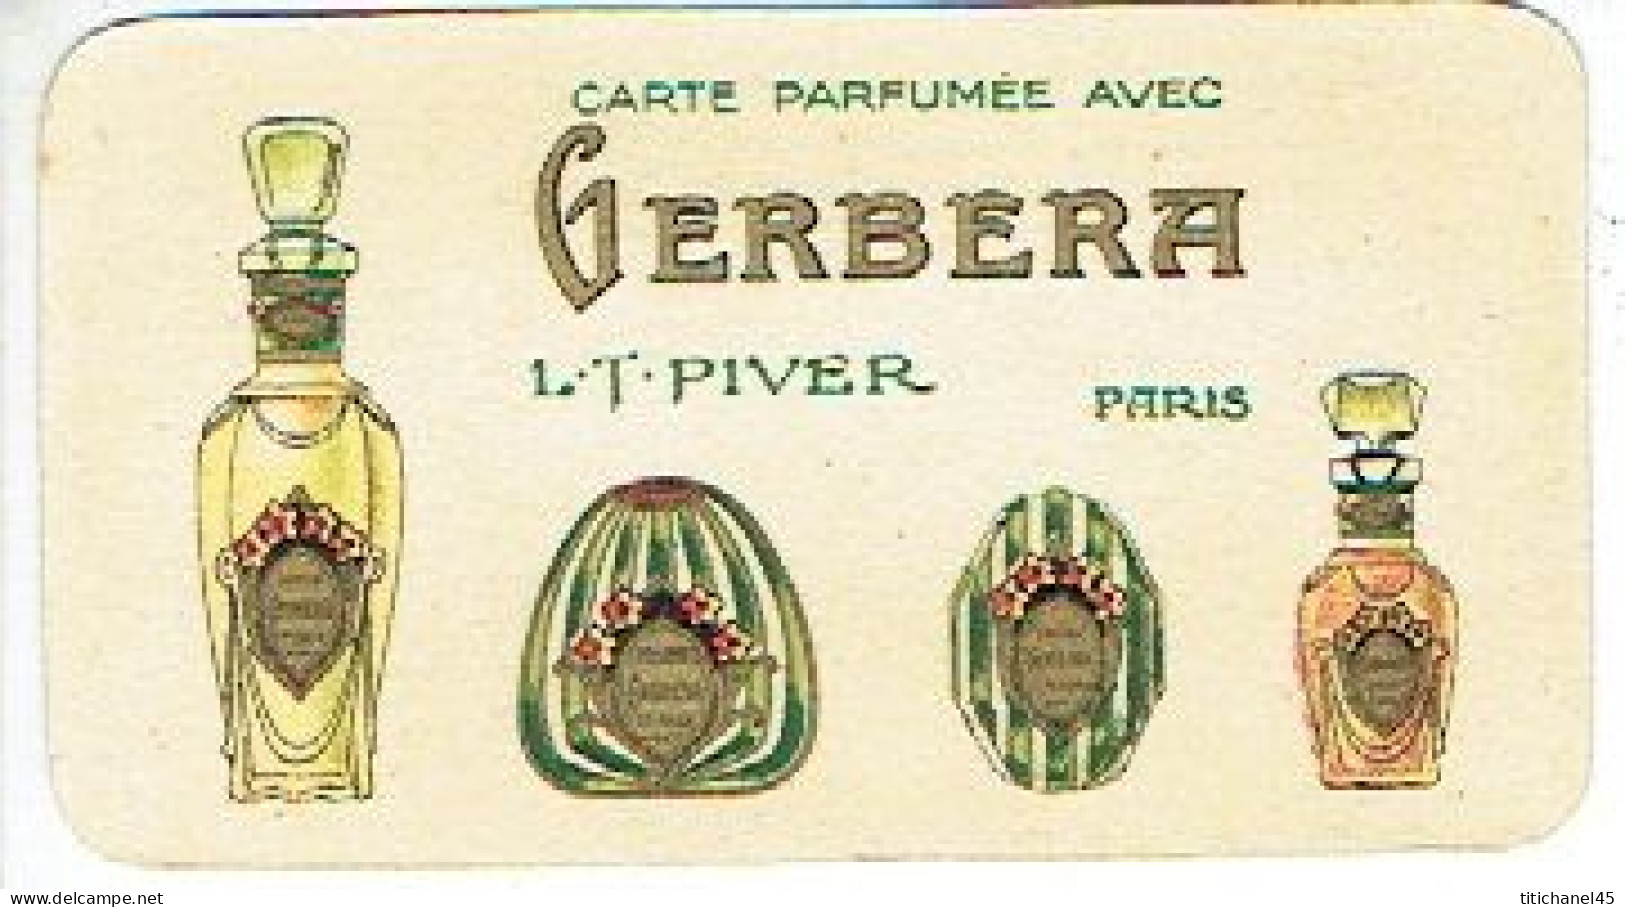 Peu Courante Carte Parfum GERBERA De L.T. PIVER - Calendrier De 1924 Au Verso - Oud (tot 1960)